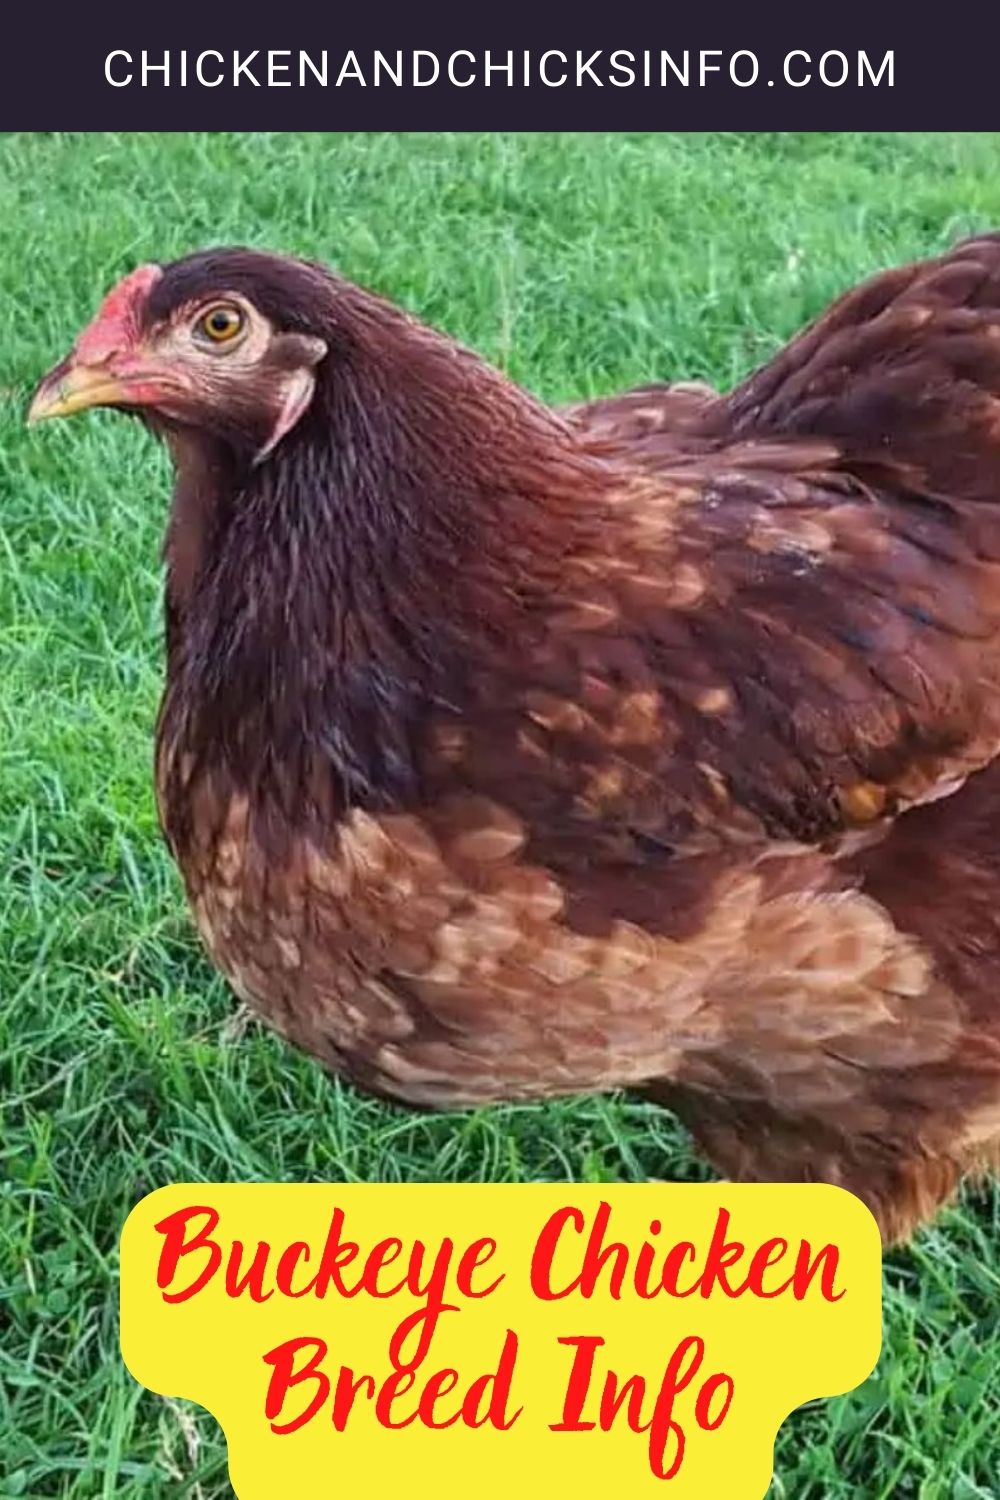 Buckeye Chicken Breed Info pinterest image.